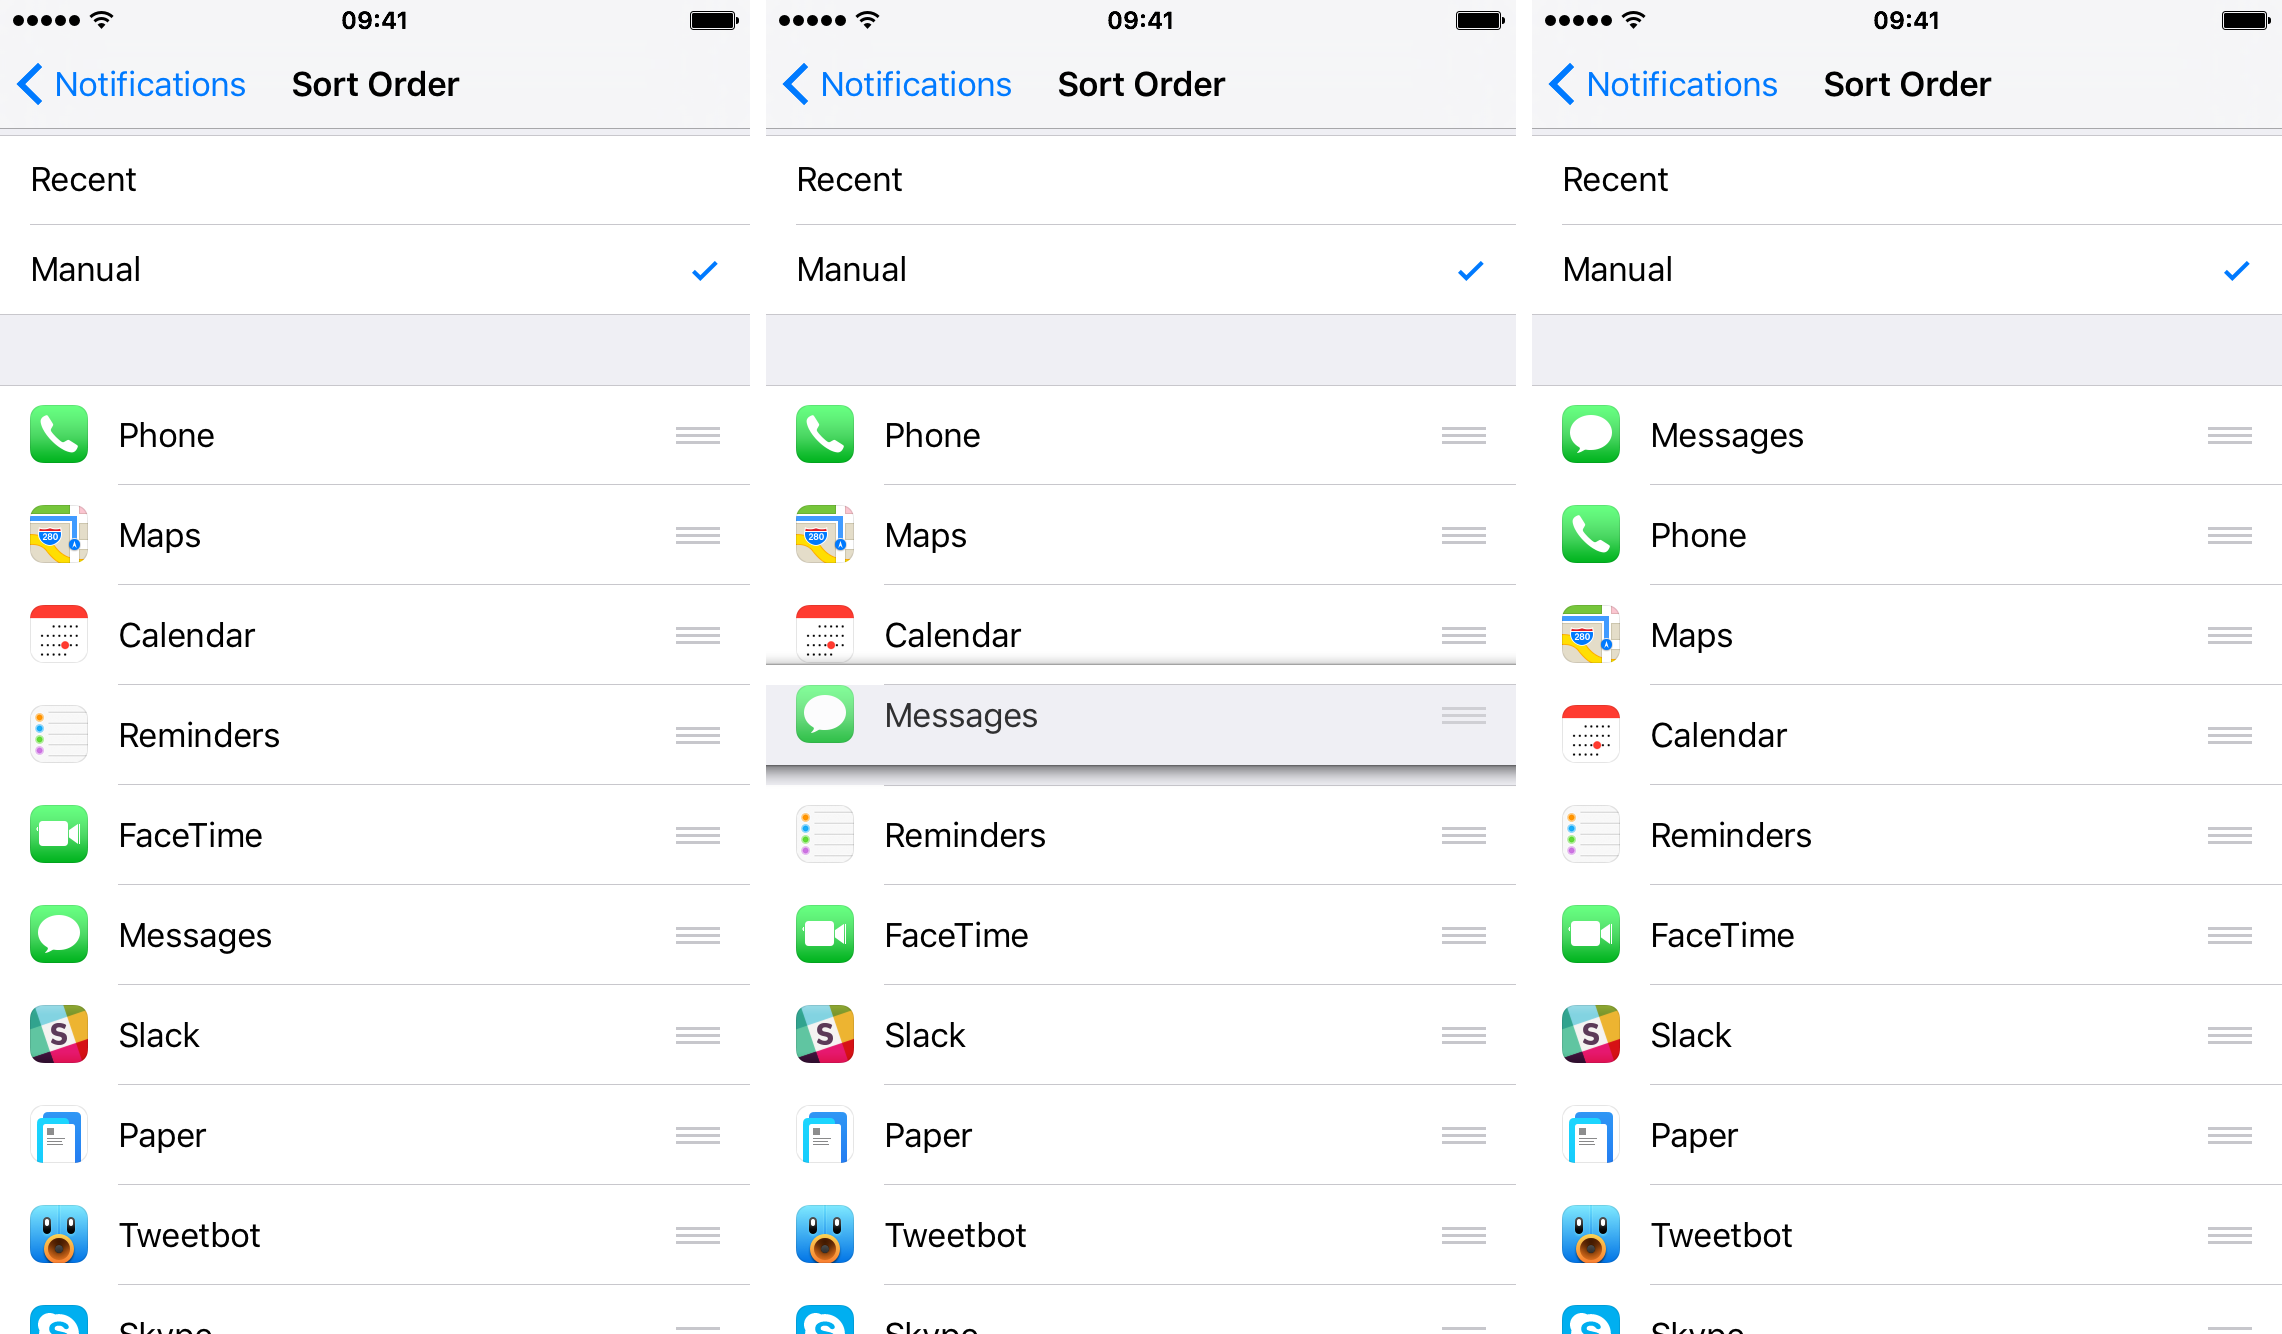 iOS 9 Settings Notifications Group by App iPhone screenshot 003